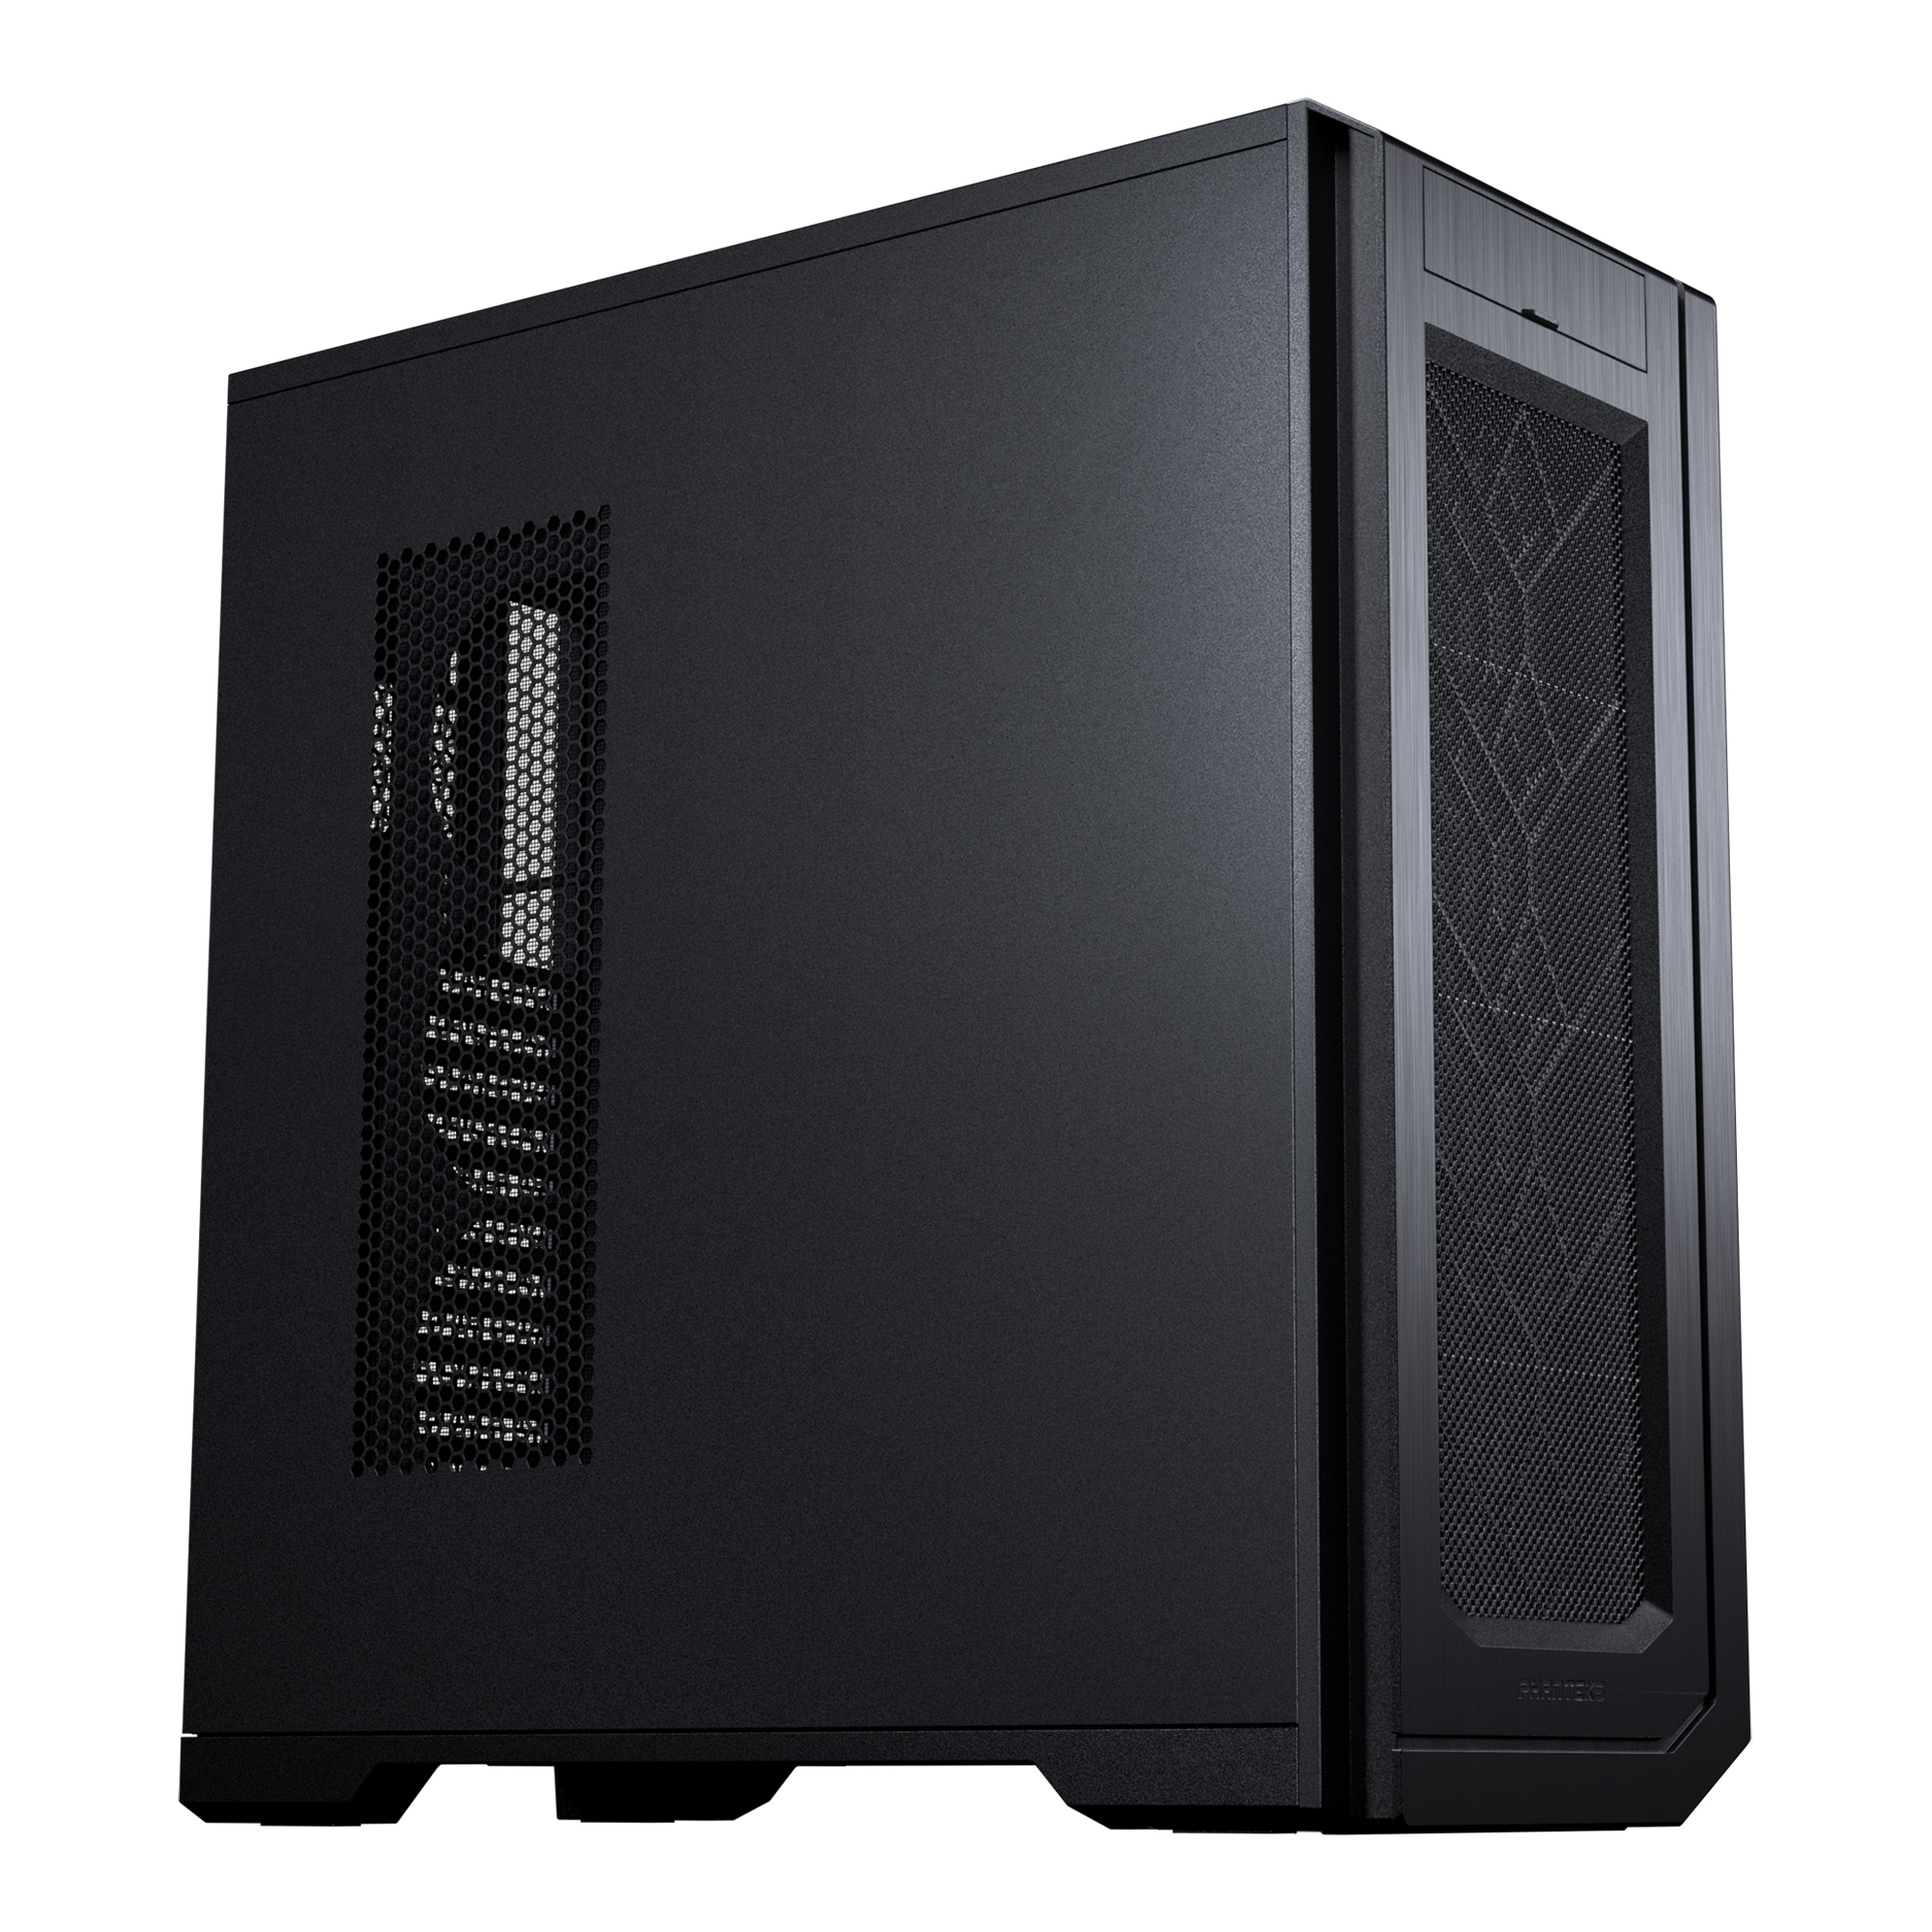 Корпус Phanteks Enthoo PRO II Server Edition, Full Tower, закрытая панель, черный